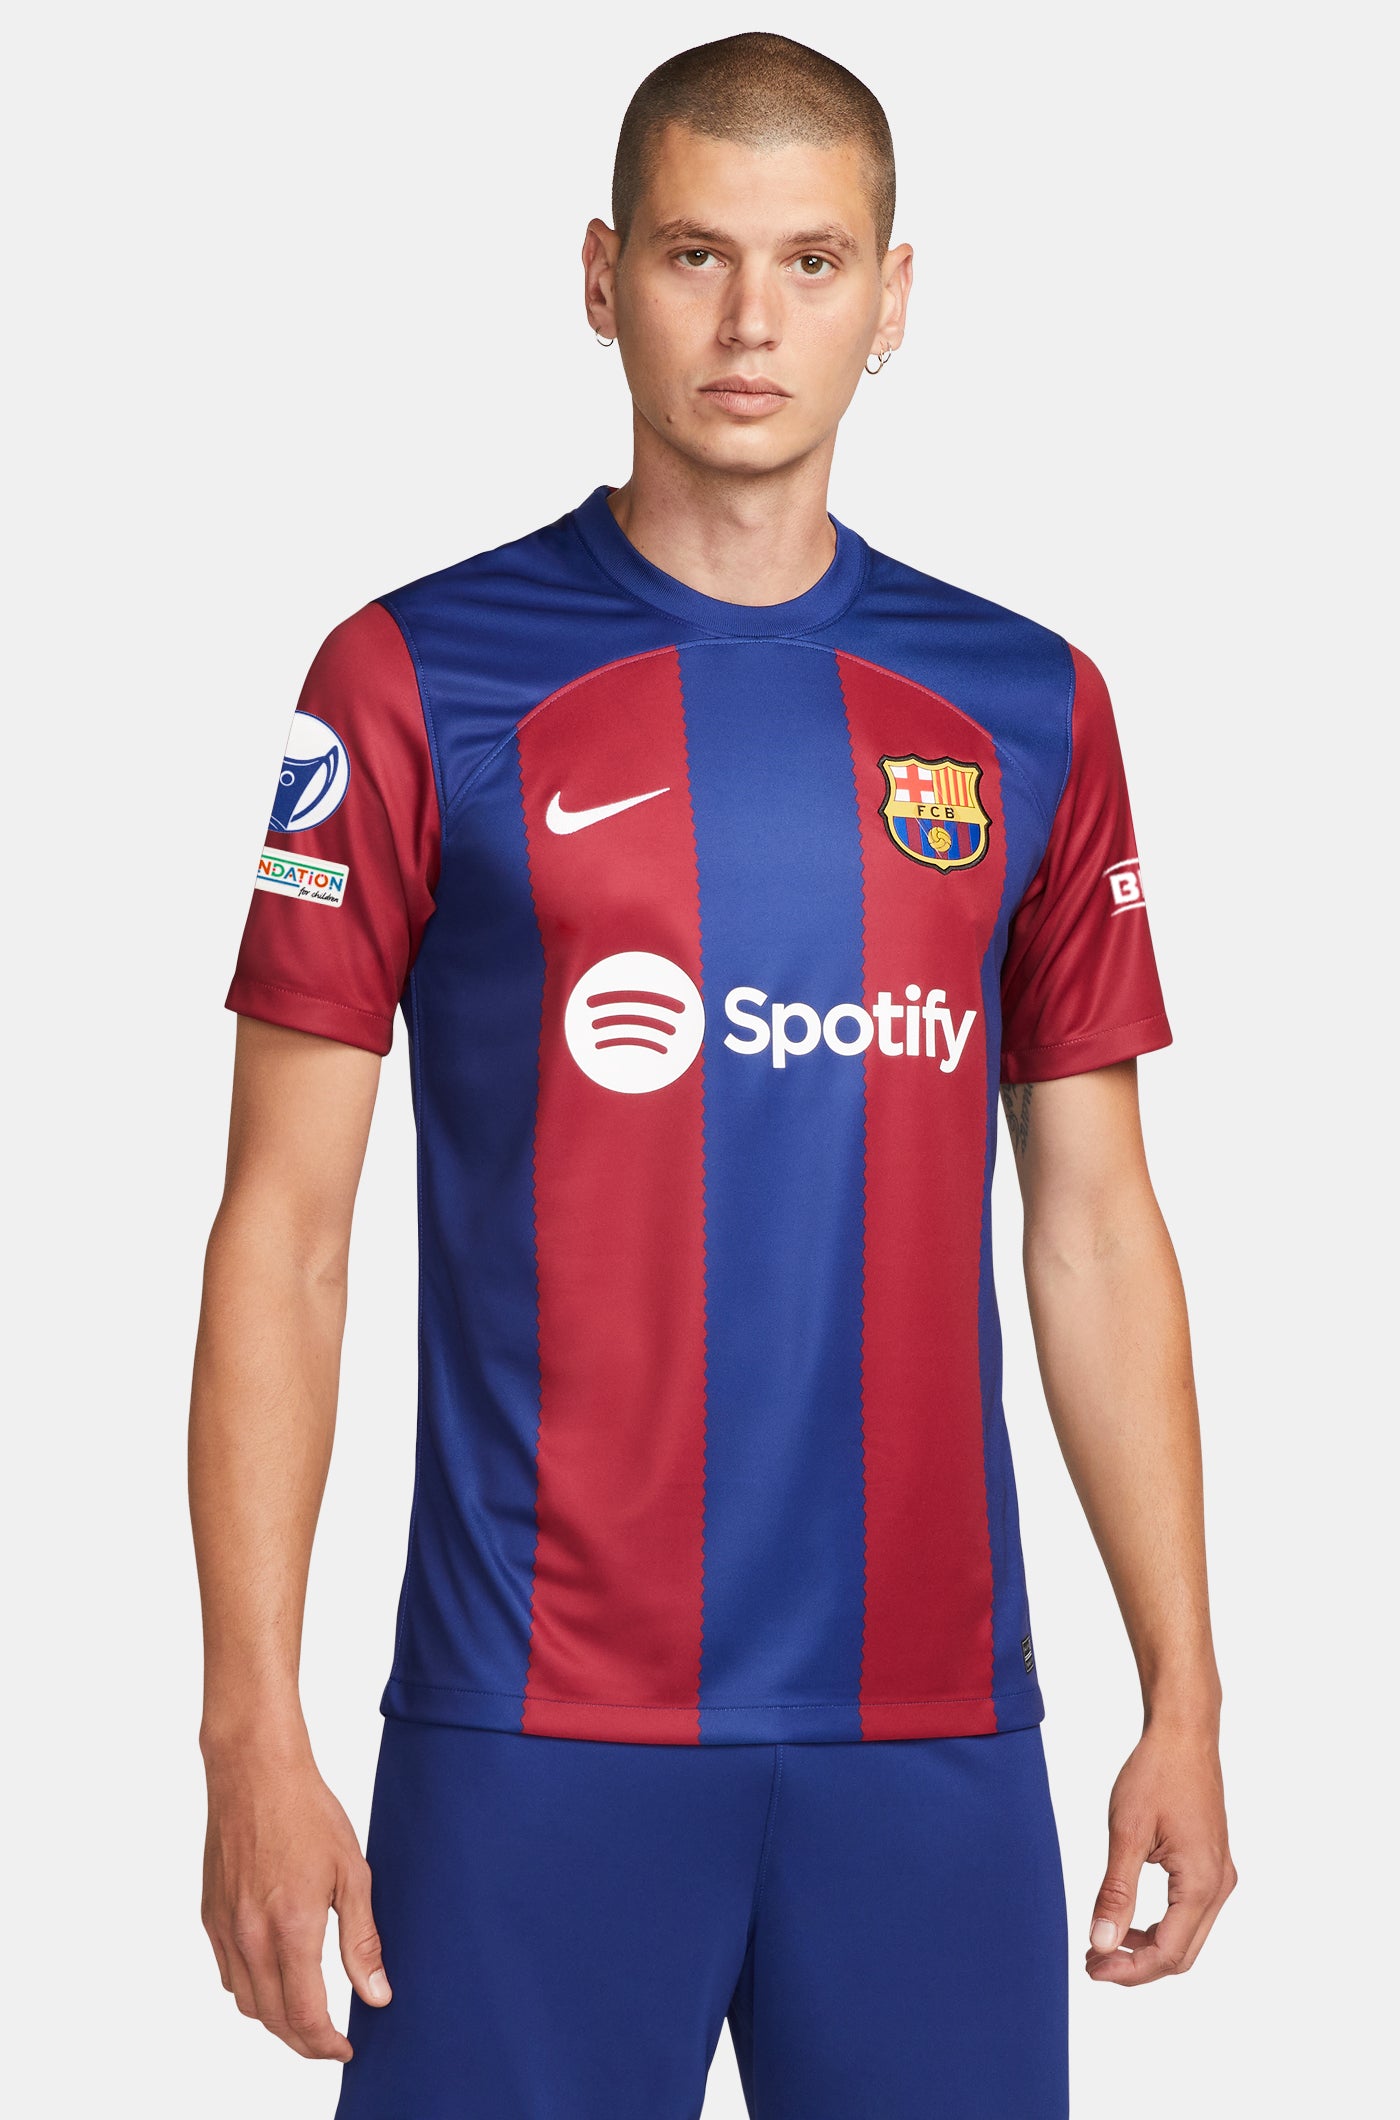 UWCL FC Barcelona home shirt 23/24 - Men - PATRI